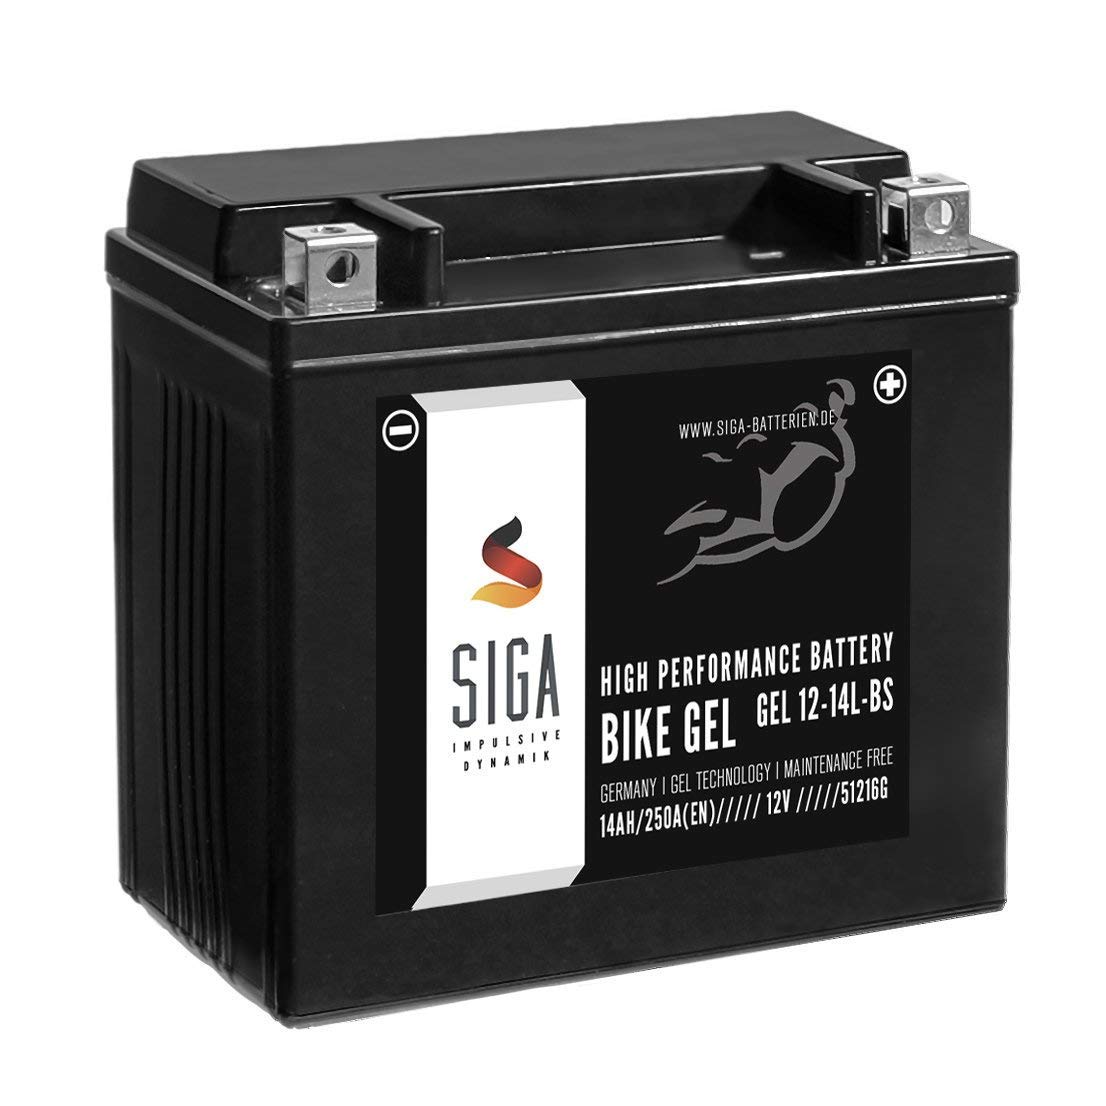 SIGA GEL Motorradbatterie 12V 14Ah 250A/EN GEL Batterie YTX14L-BS GEL12-14L-BS OEM 65958-04A HVT3 GTX14L-BS